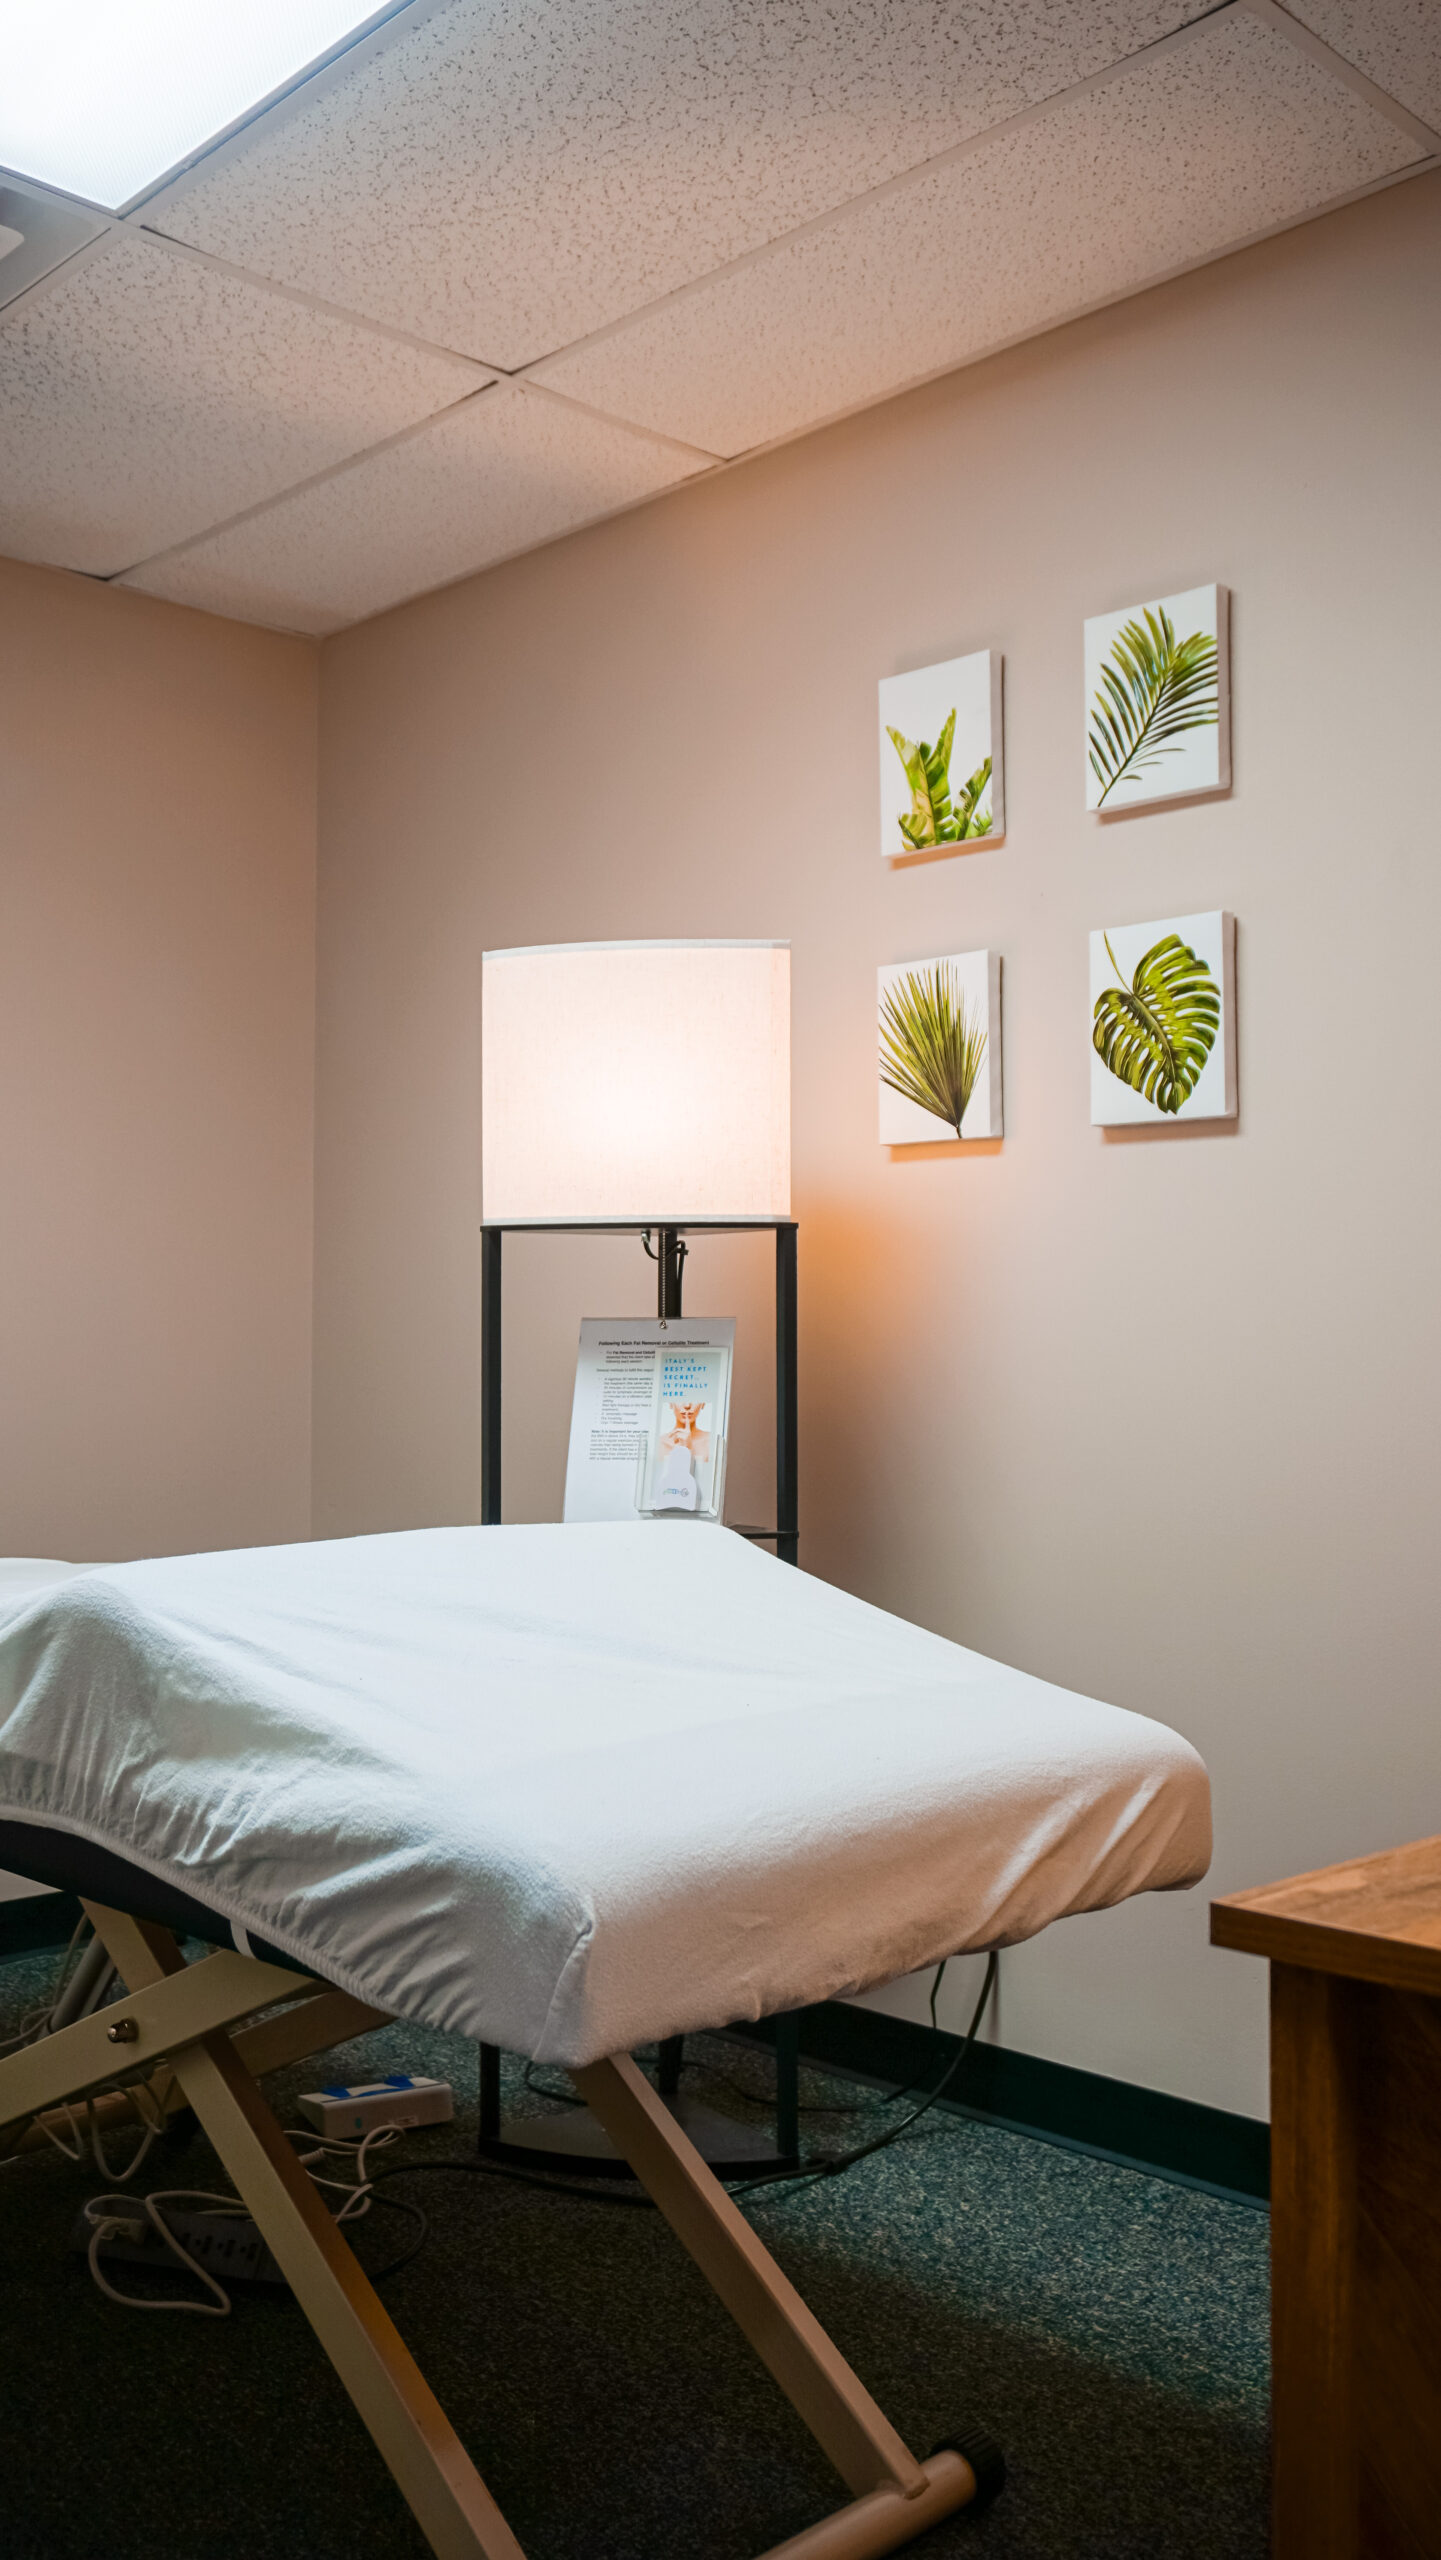 Massage room at the Cryo Wellness Spa.